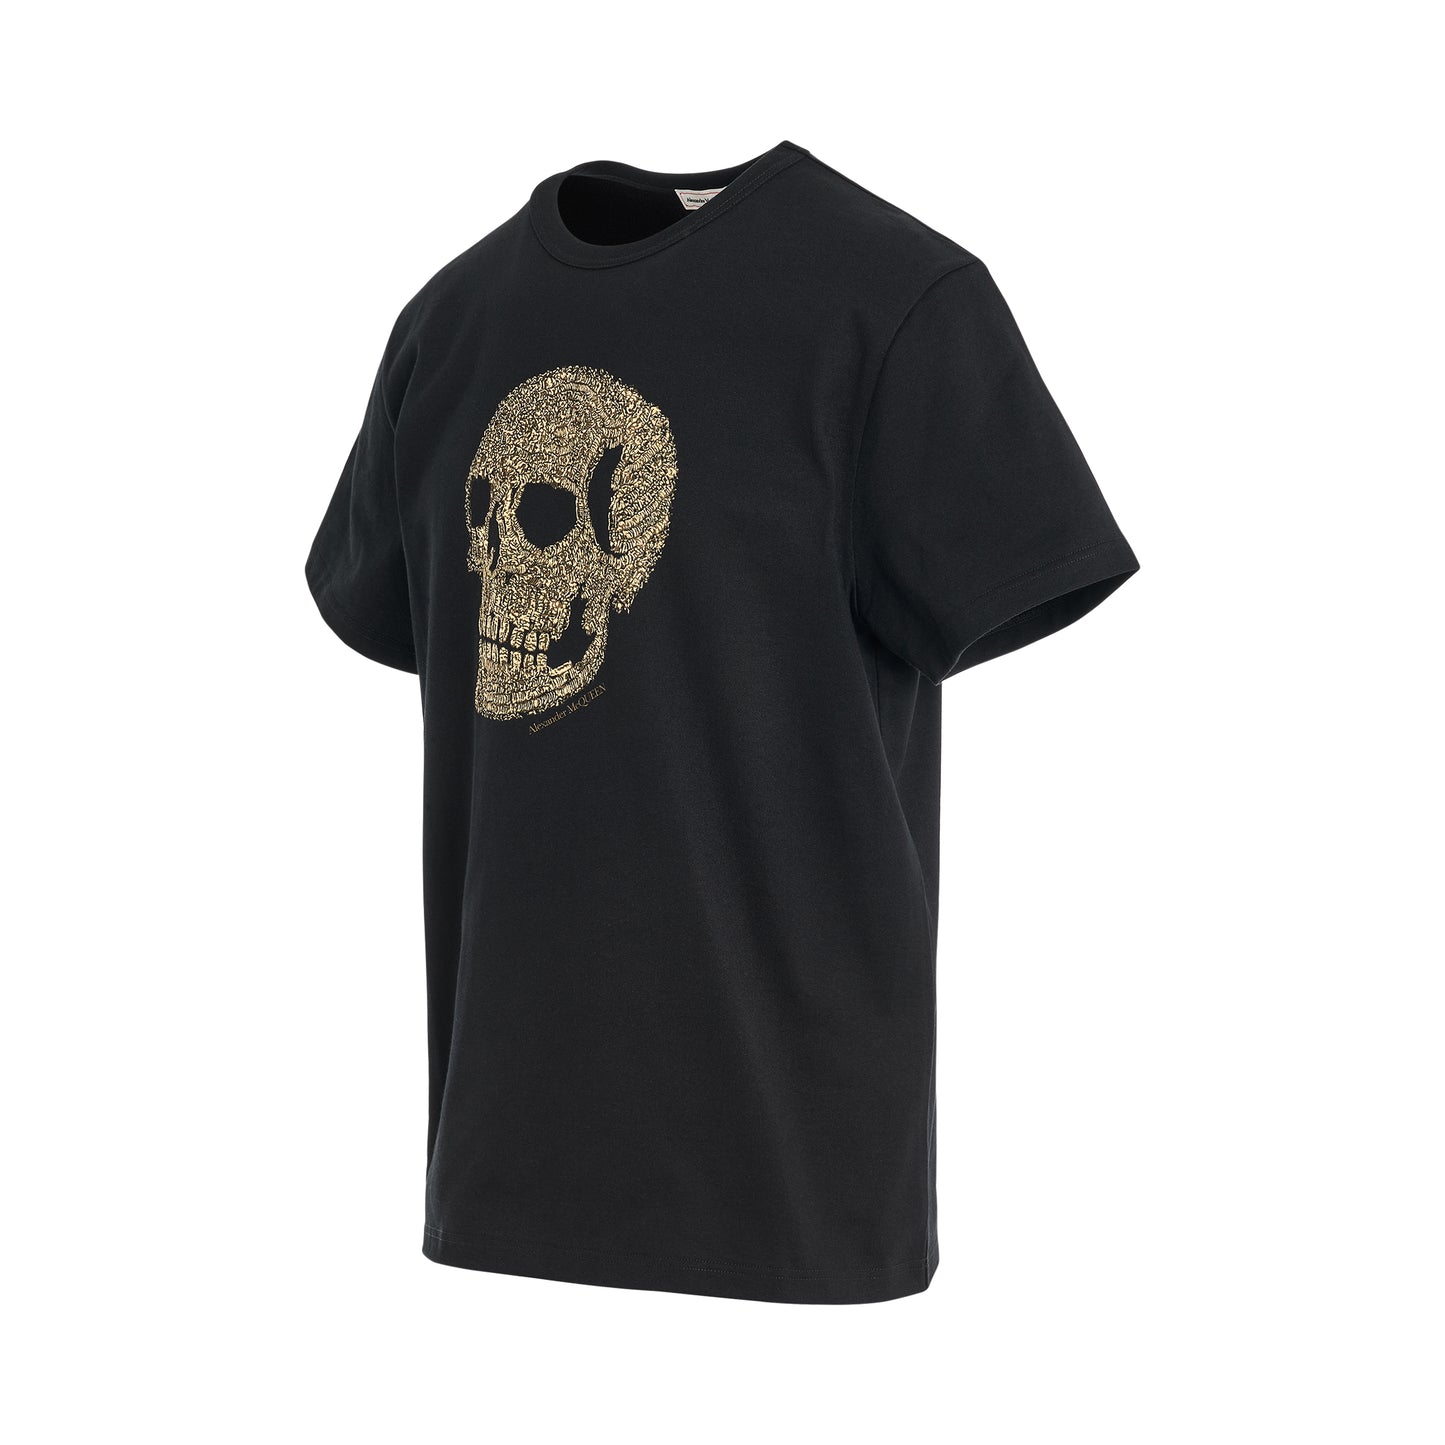 Gold Skull Print T-Shirt in Black/Gold